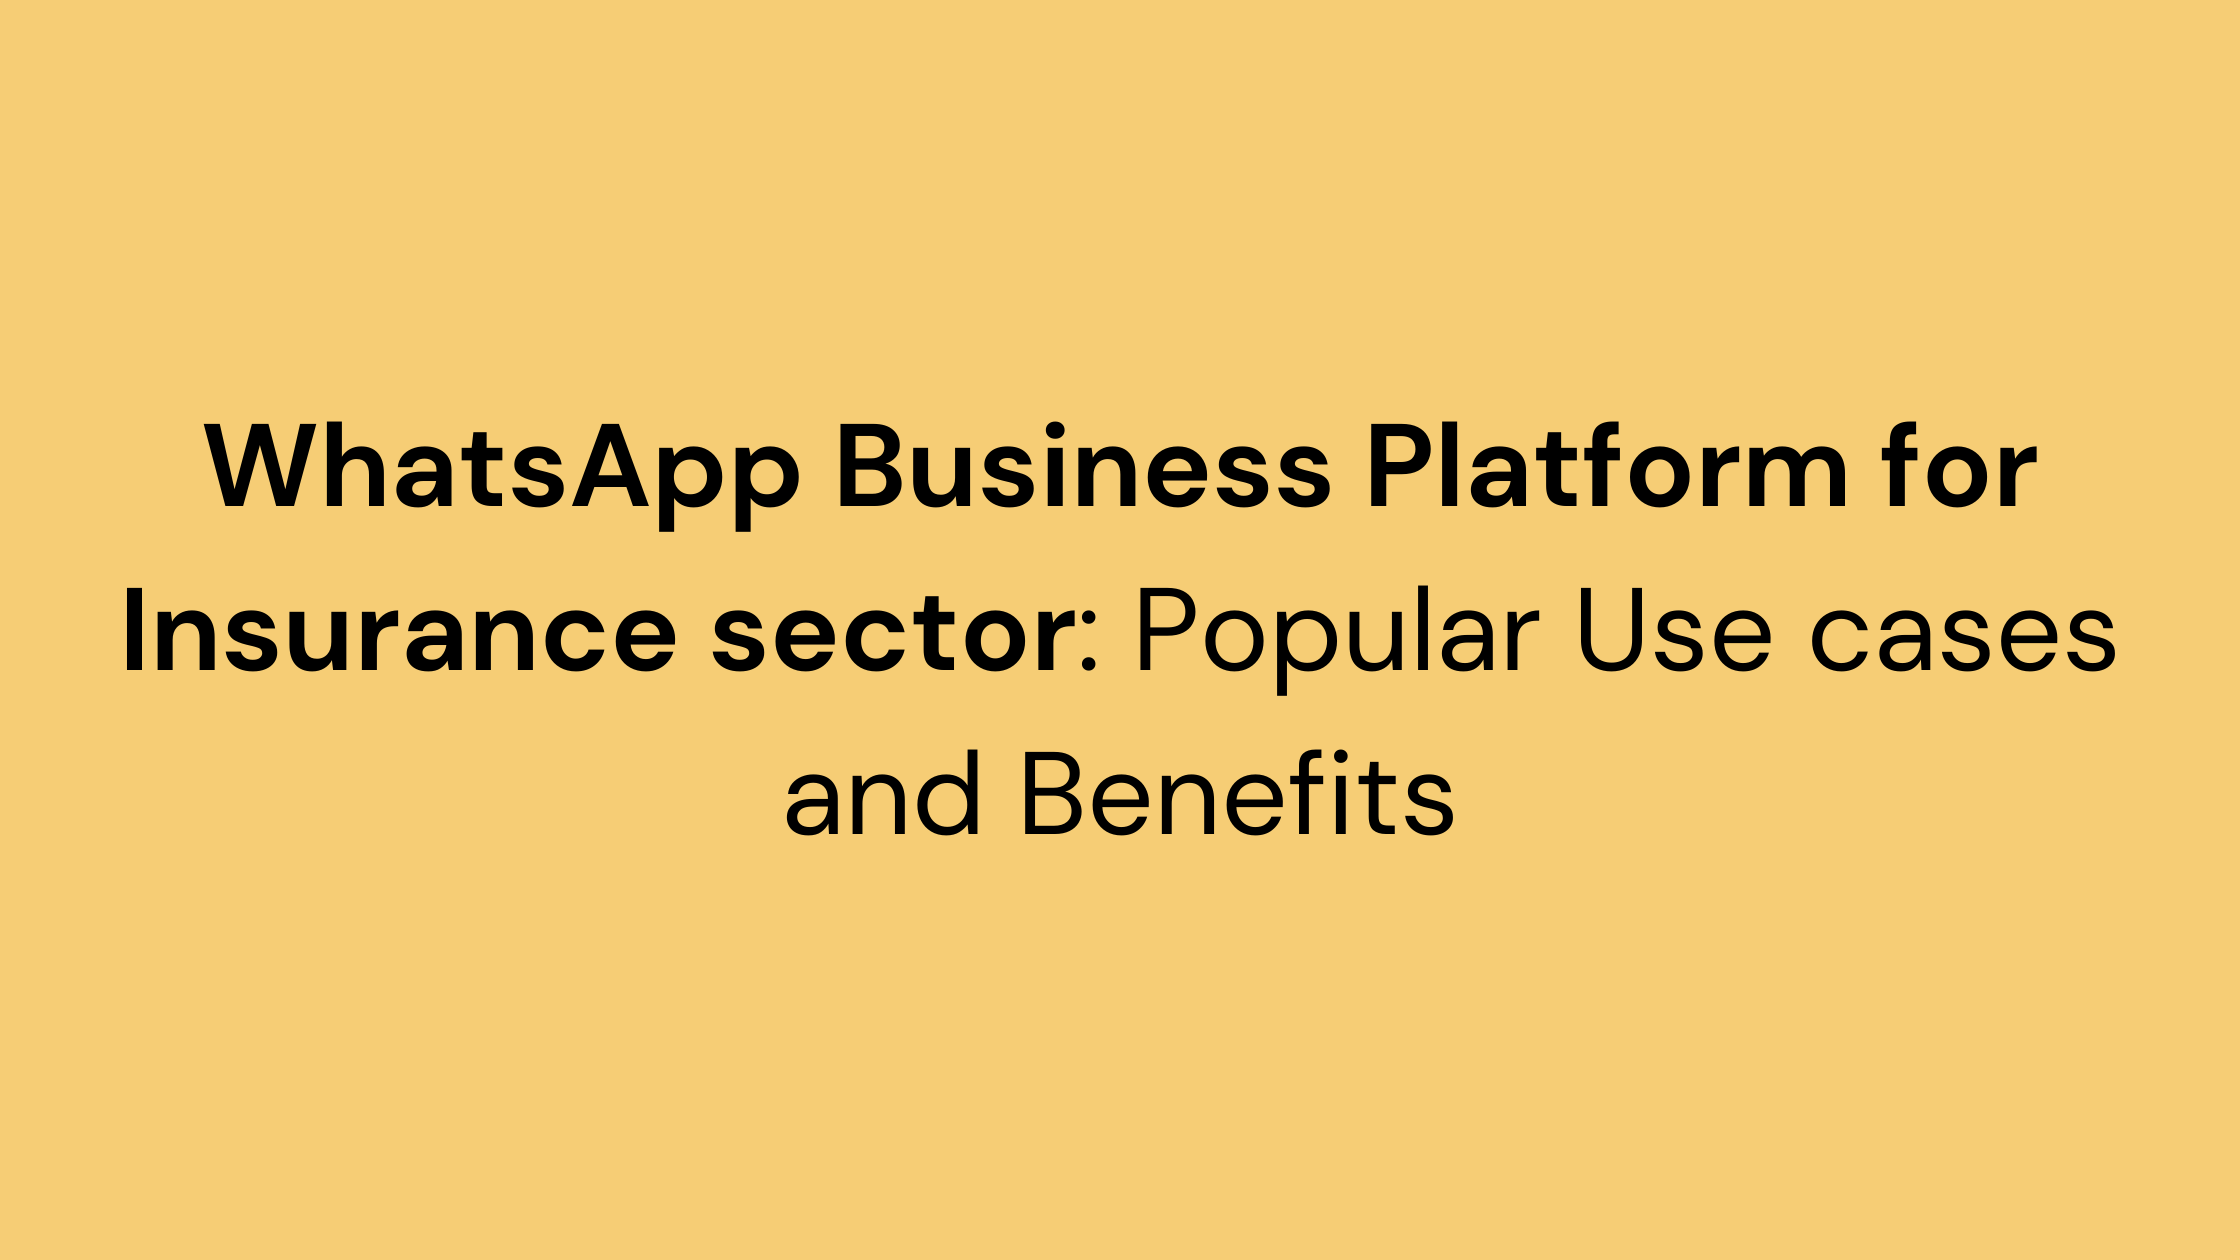 WhatsApp Business Platform for Insurance sectorne